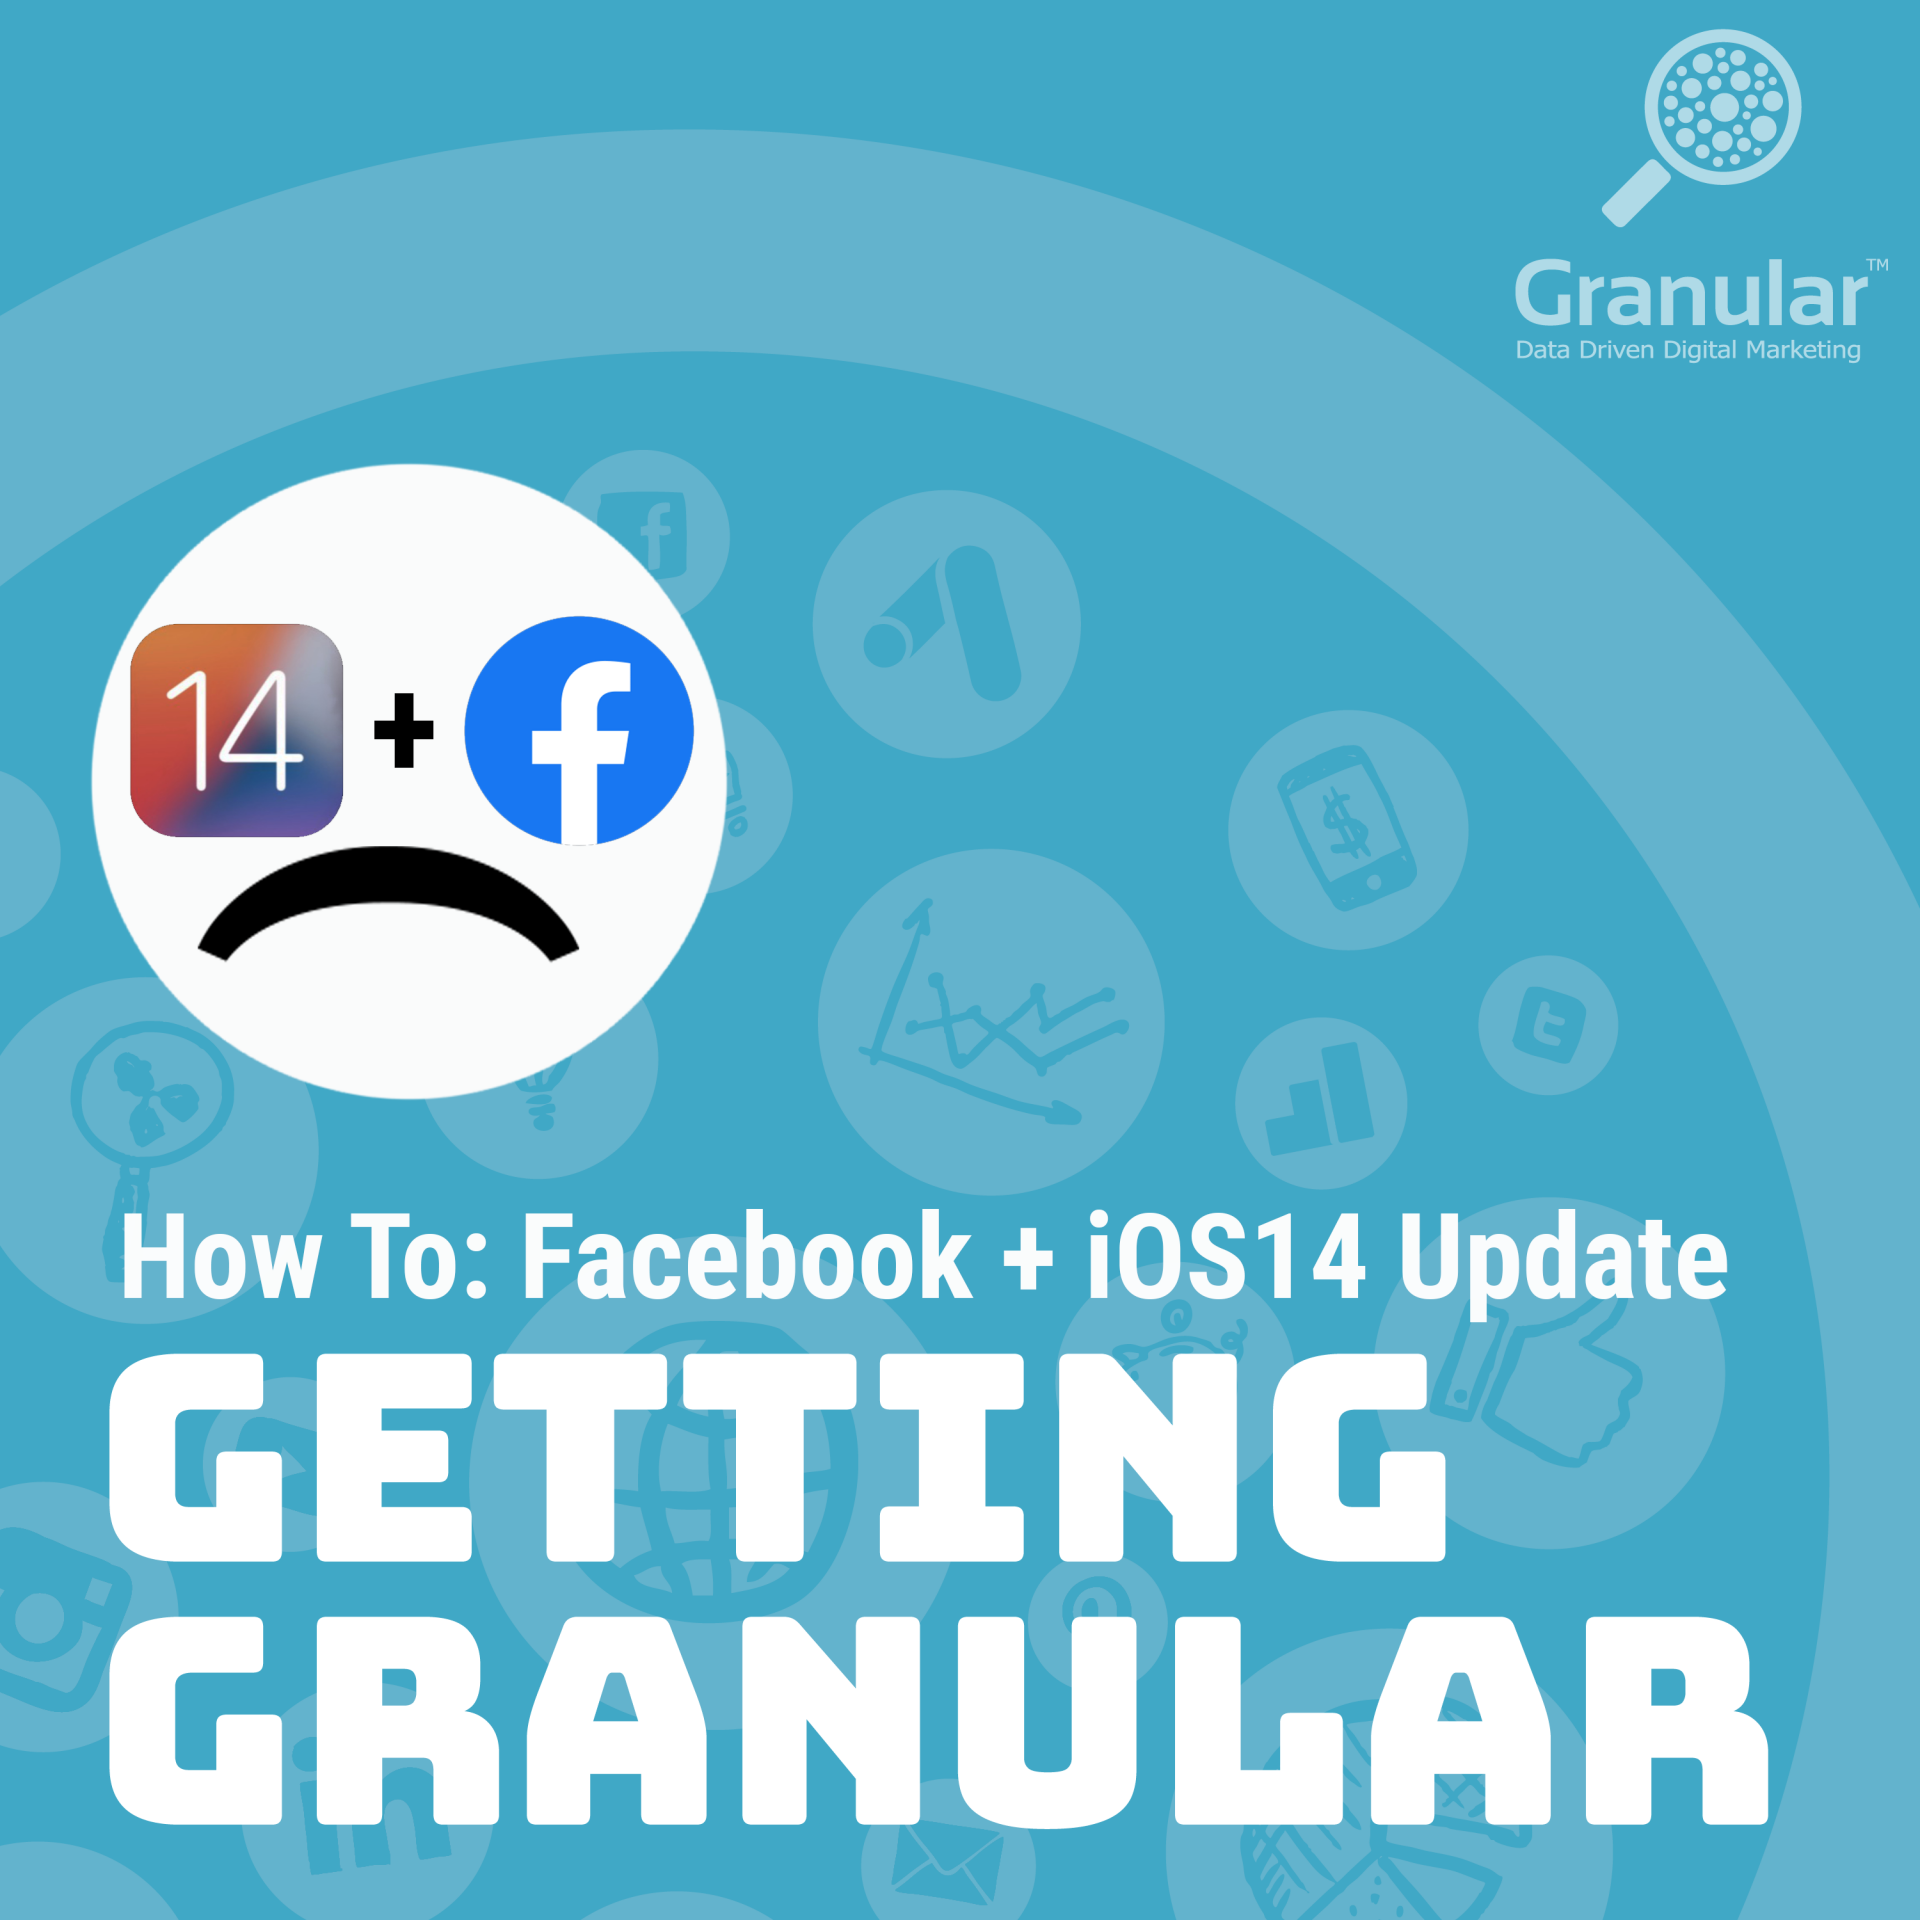 Granular Podcast: Getting Granular - How to: Facebook + iOS14 Update